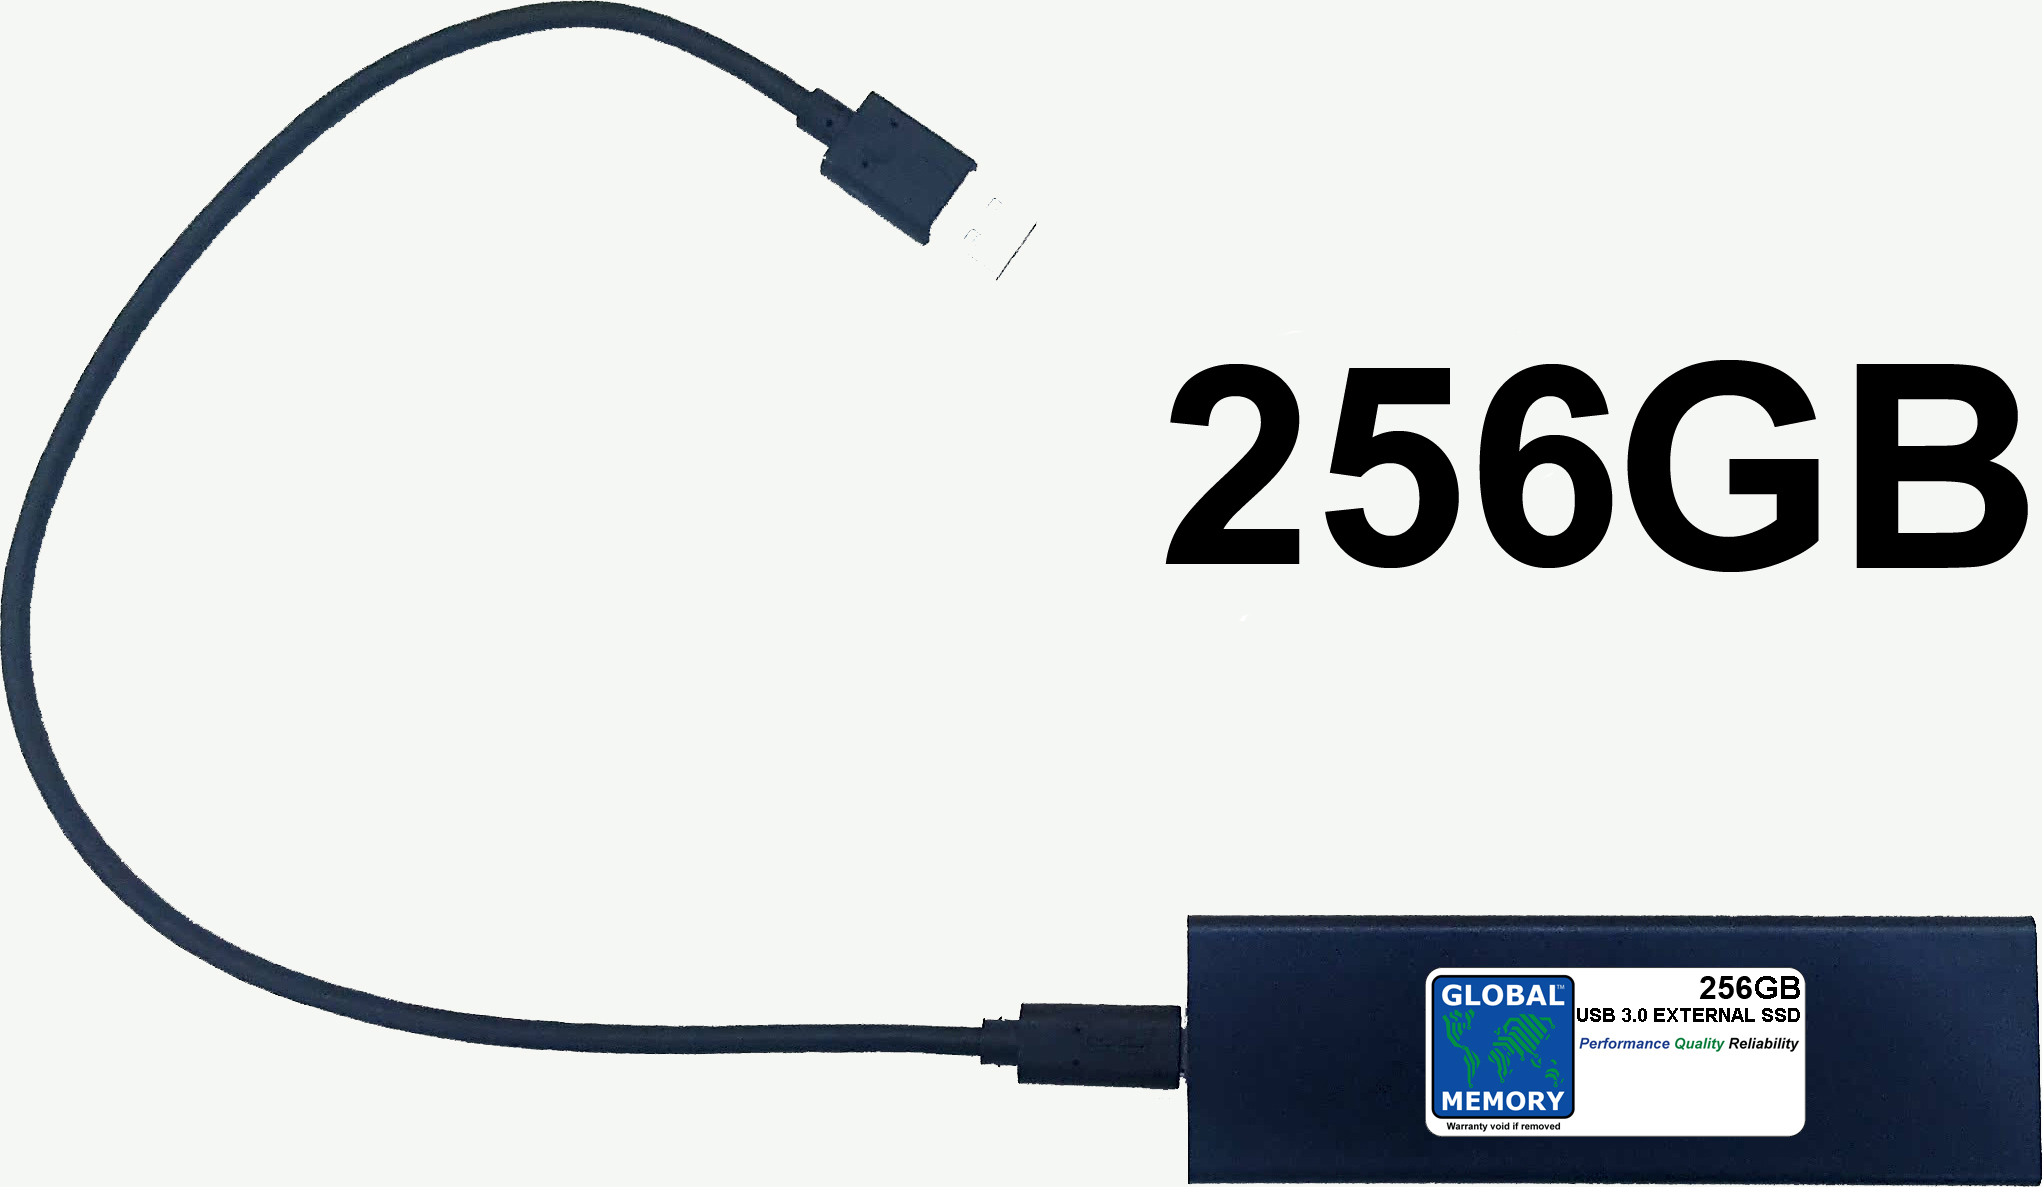 256GB M.2 2280 PCIe Gen3 x4 NVMe SSD EXTERNAL USB 3 FOR LAPTOPS / DESKTOP PCs / SERVERS / WORKSTATIONS - Click Image to Close